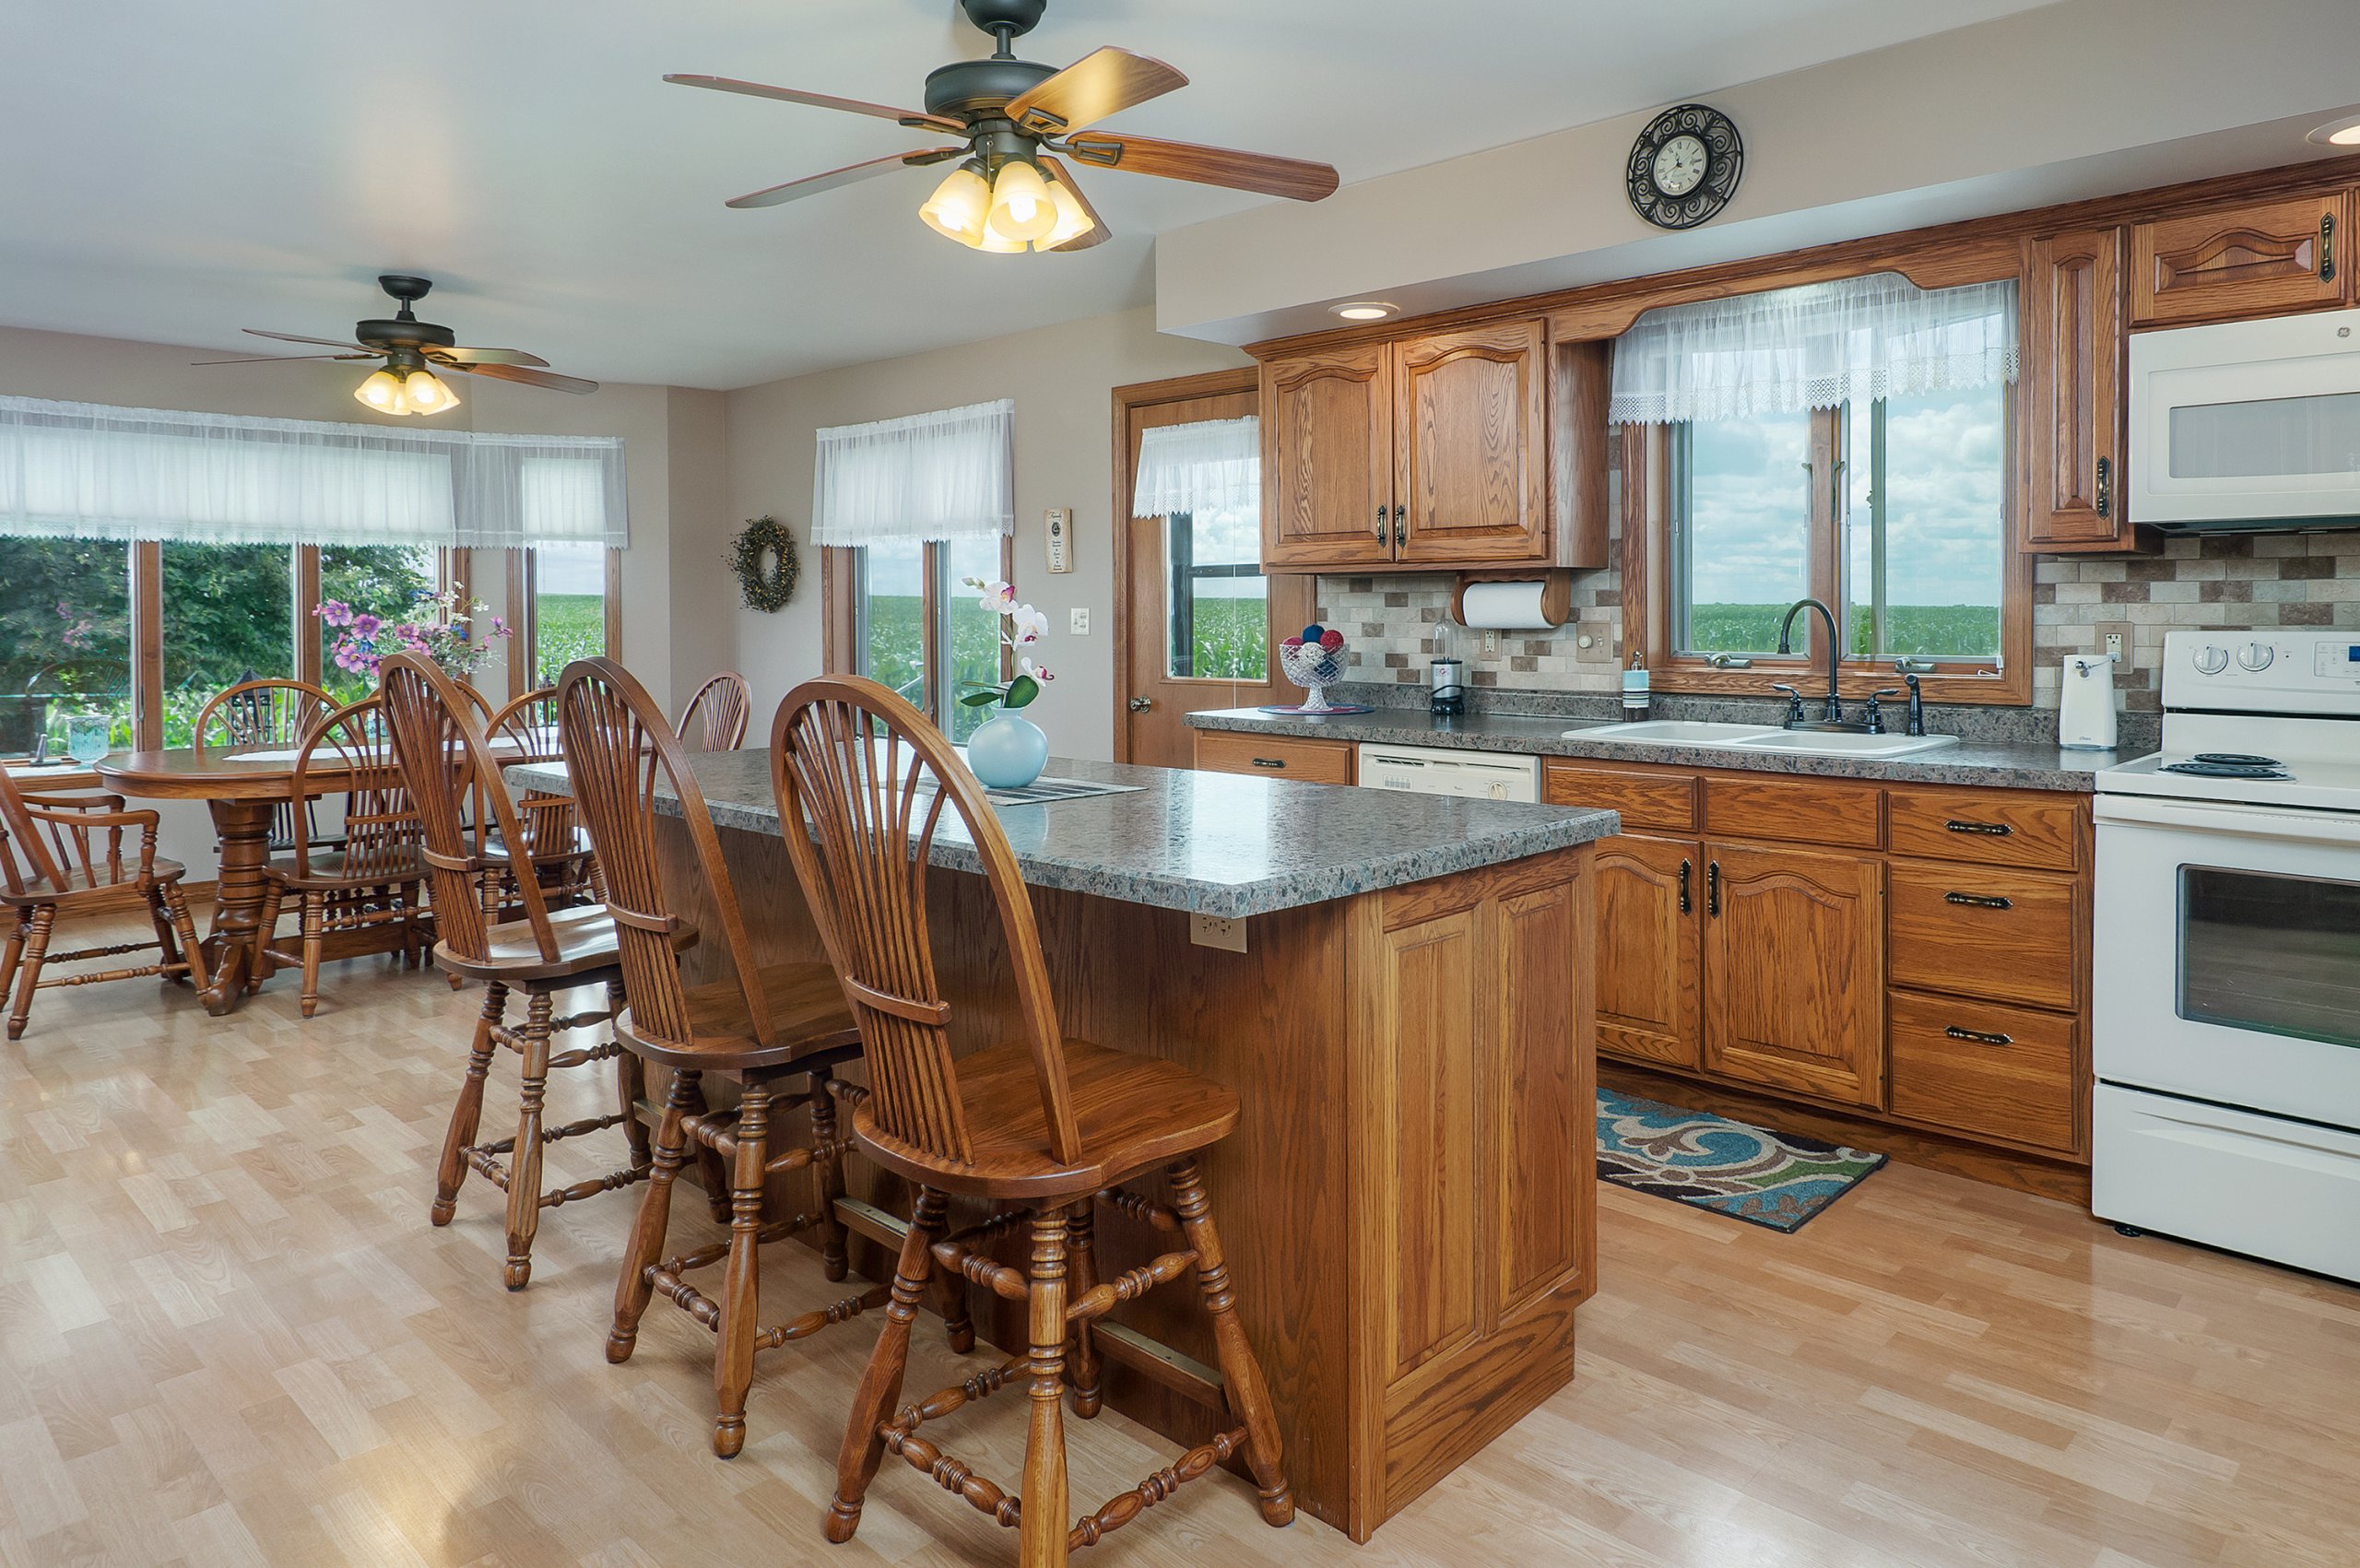 Huge spacious kitchen interior photograph of Marseilles, Illinois farmette.